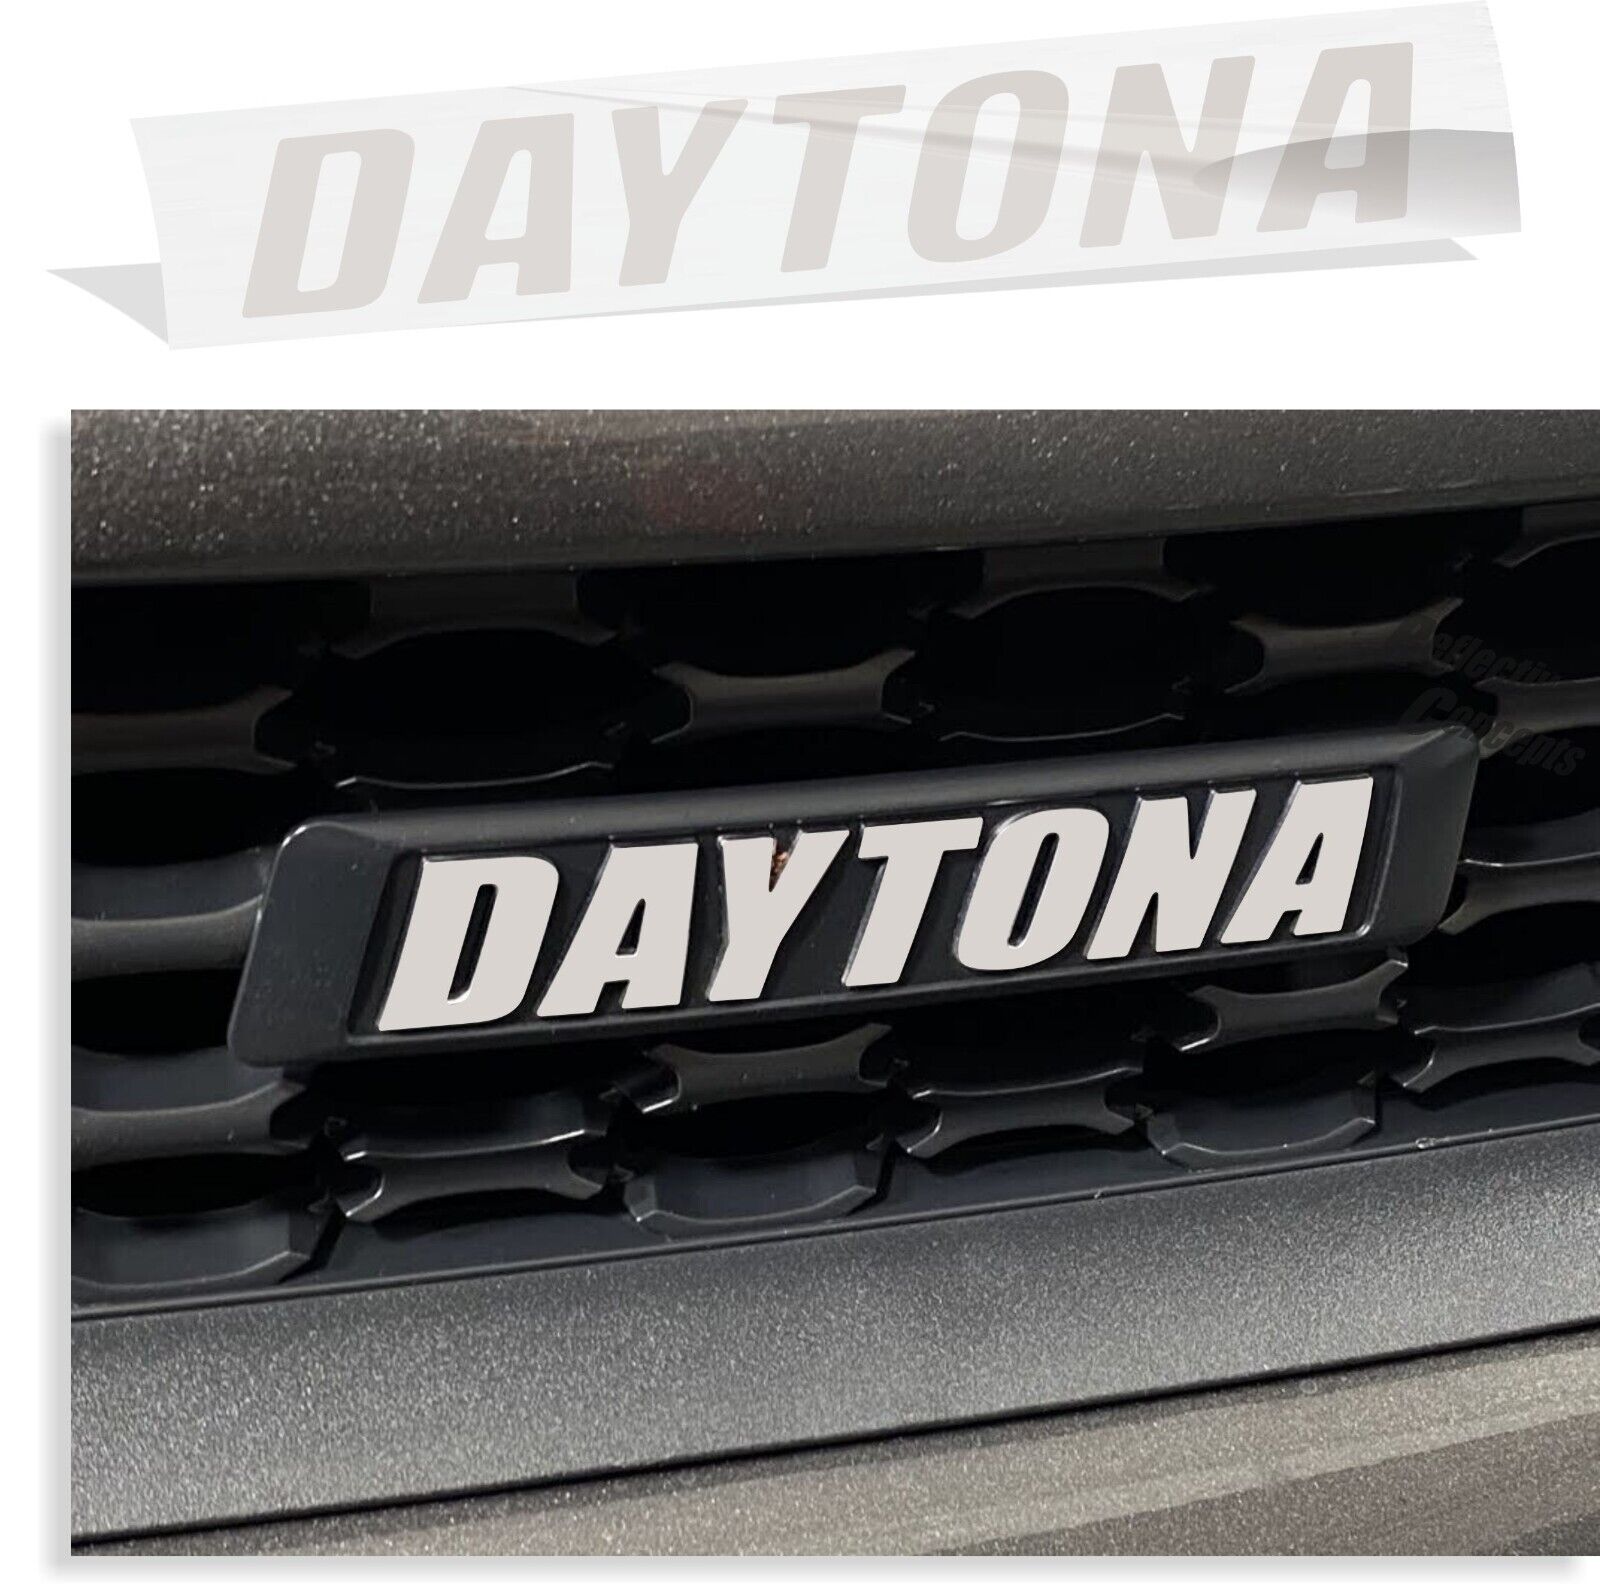 DAYTONA Grille Emblem Overlay Decal for Dodge Charger Daytona